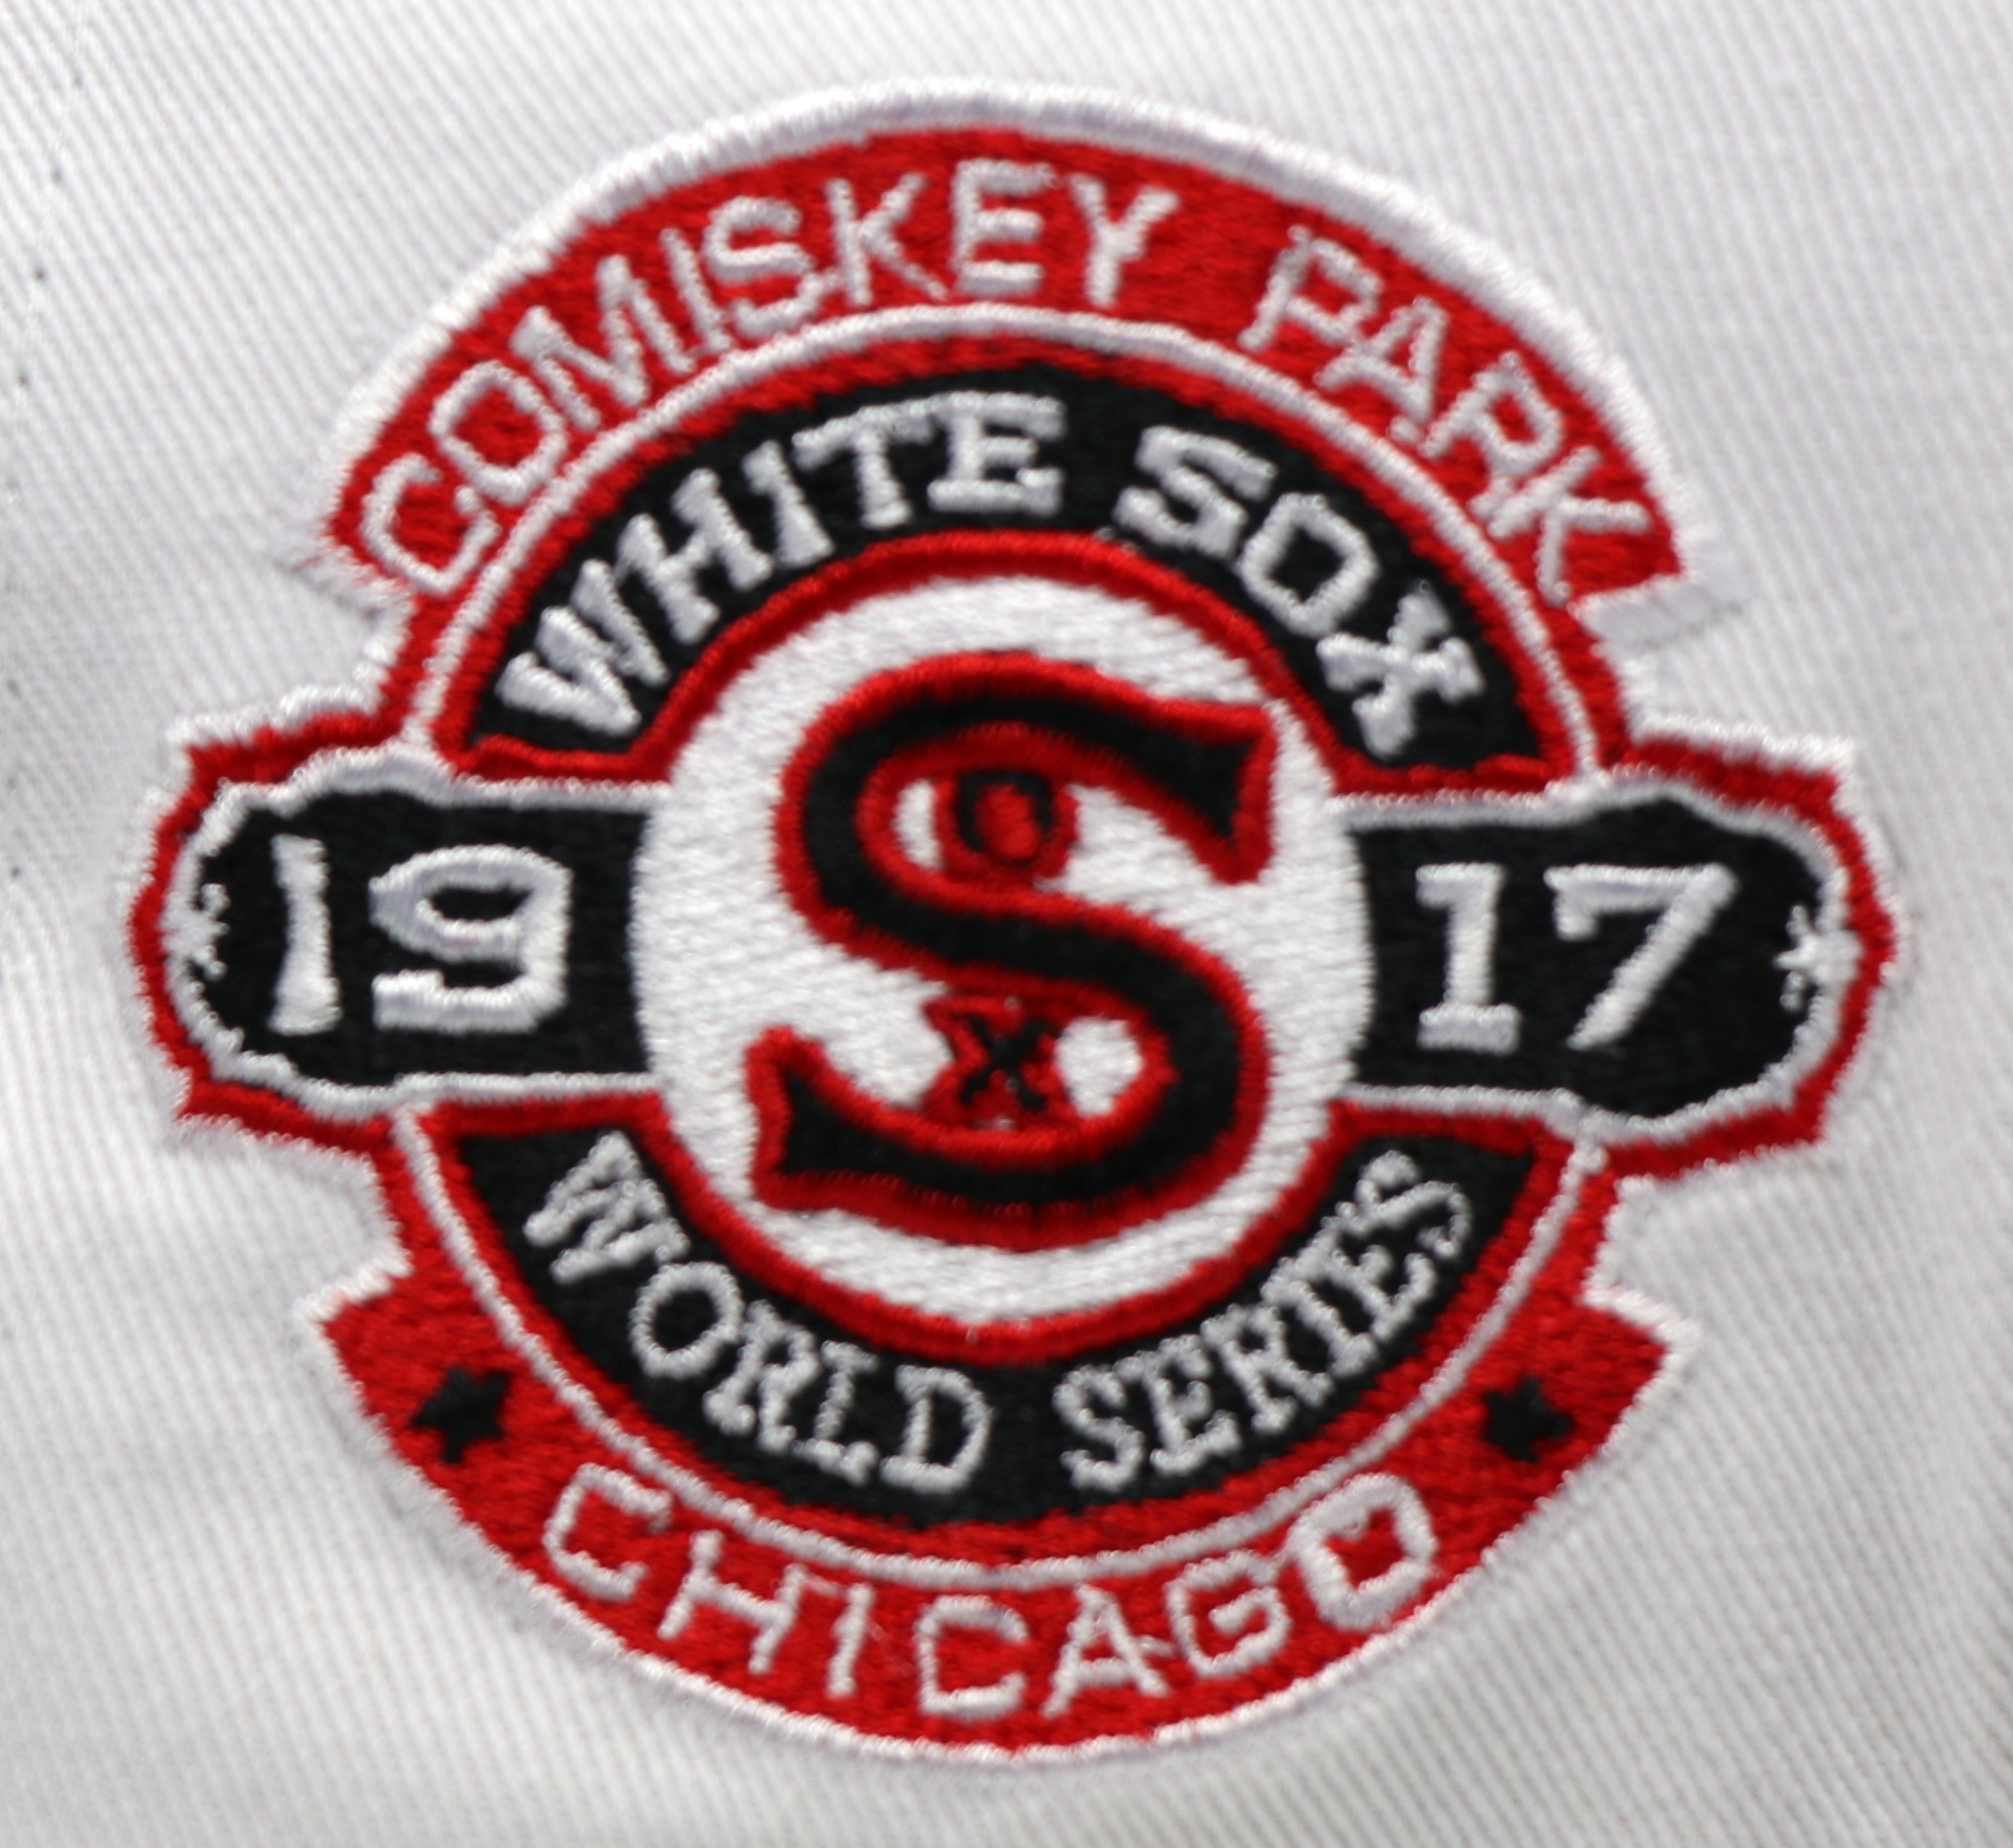 CHICAGO WHITESOX "1917 WORLDSERIES" NEW ERA 9FIFTY SNAPBACK (RED UNDER VISOR)